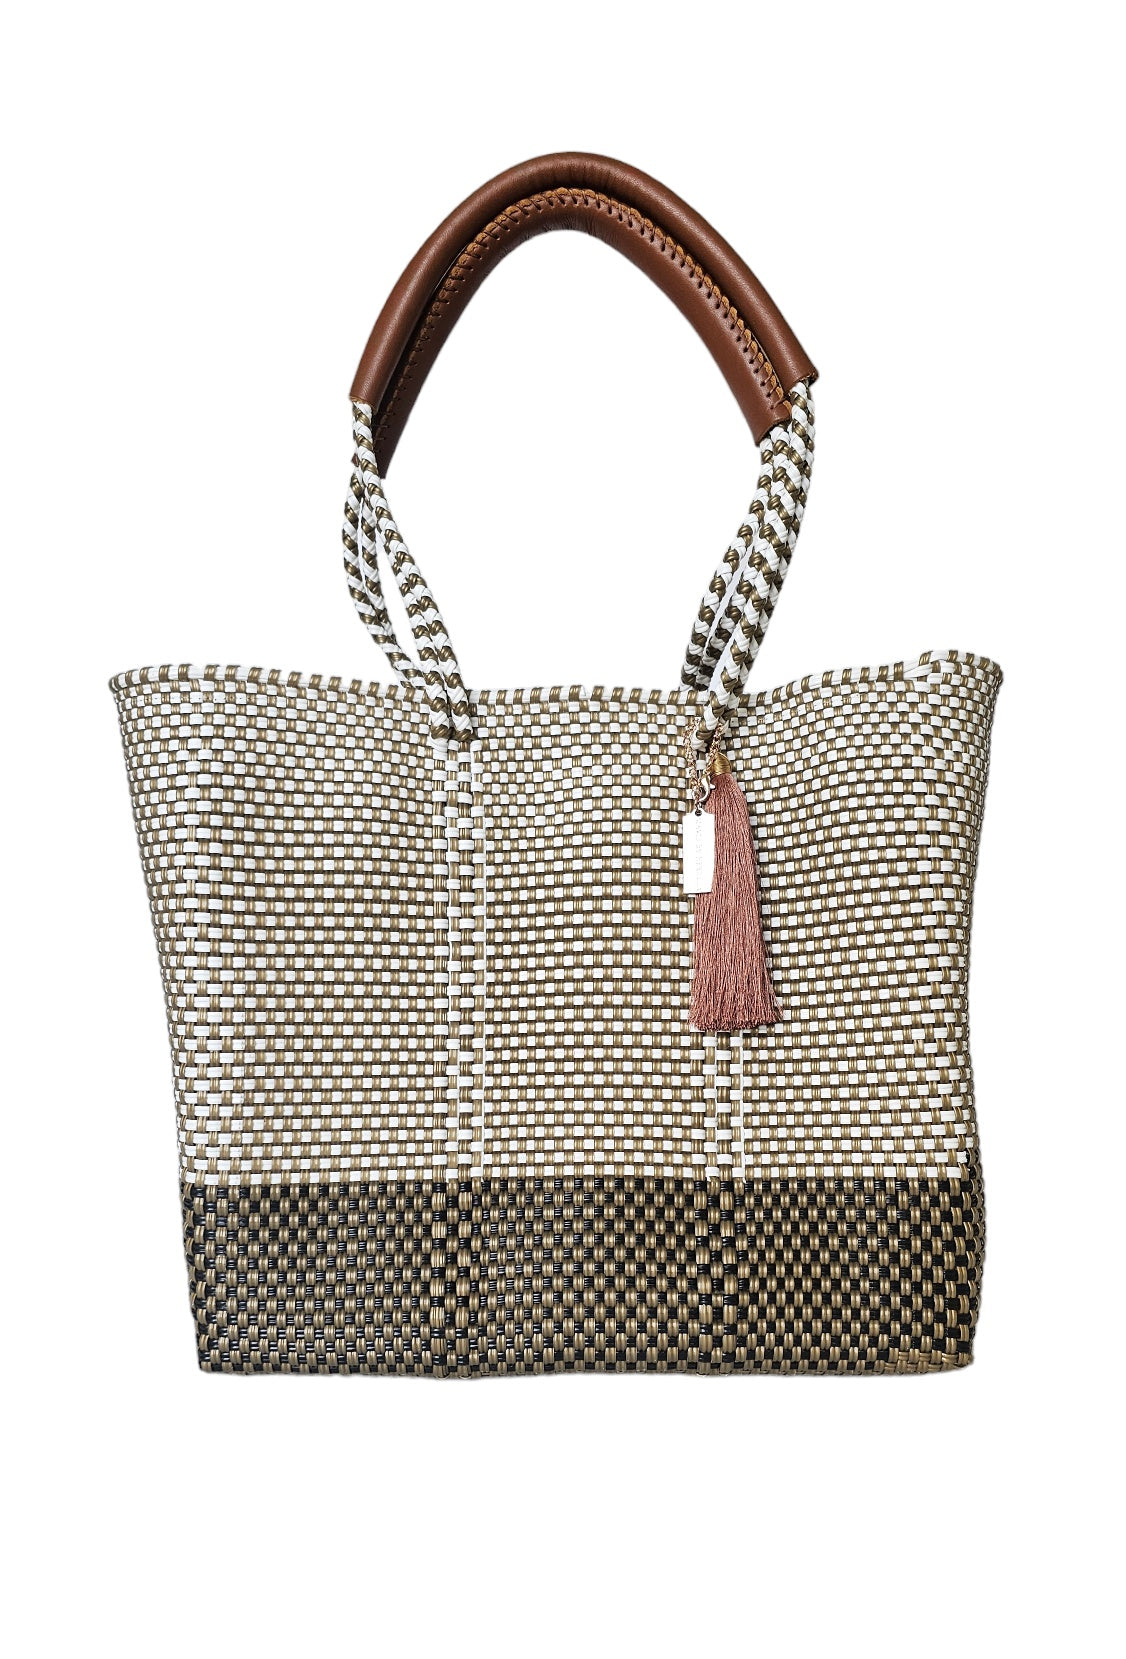 Tote bag brown gold women handbag | Mavis by Herrera